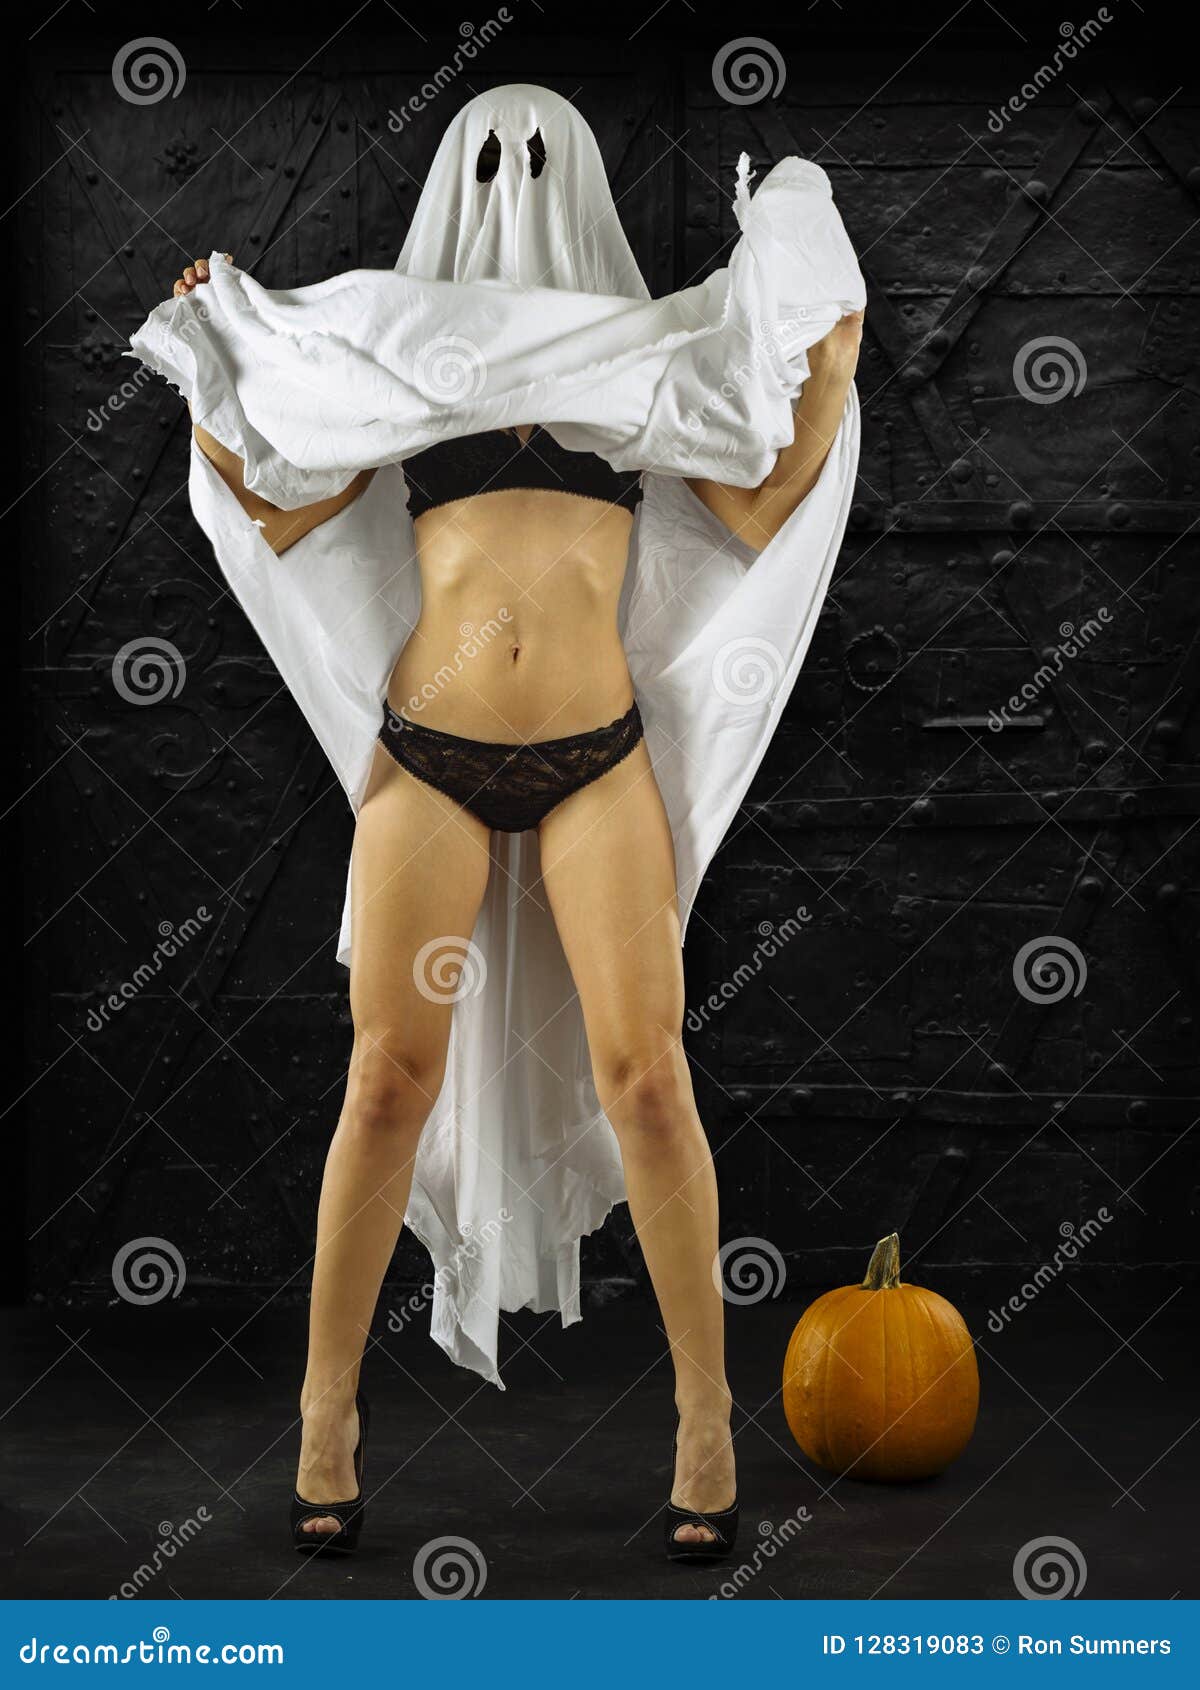 Bed Sheet Ghost For Fun Halloween Stock Image - Image of sheet, pumpkin: 12...